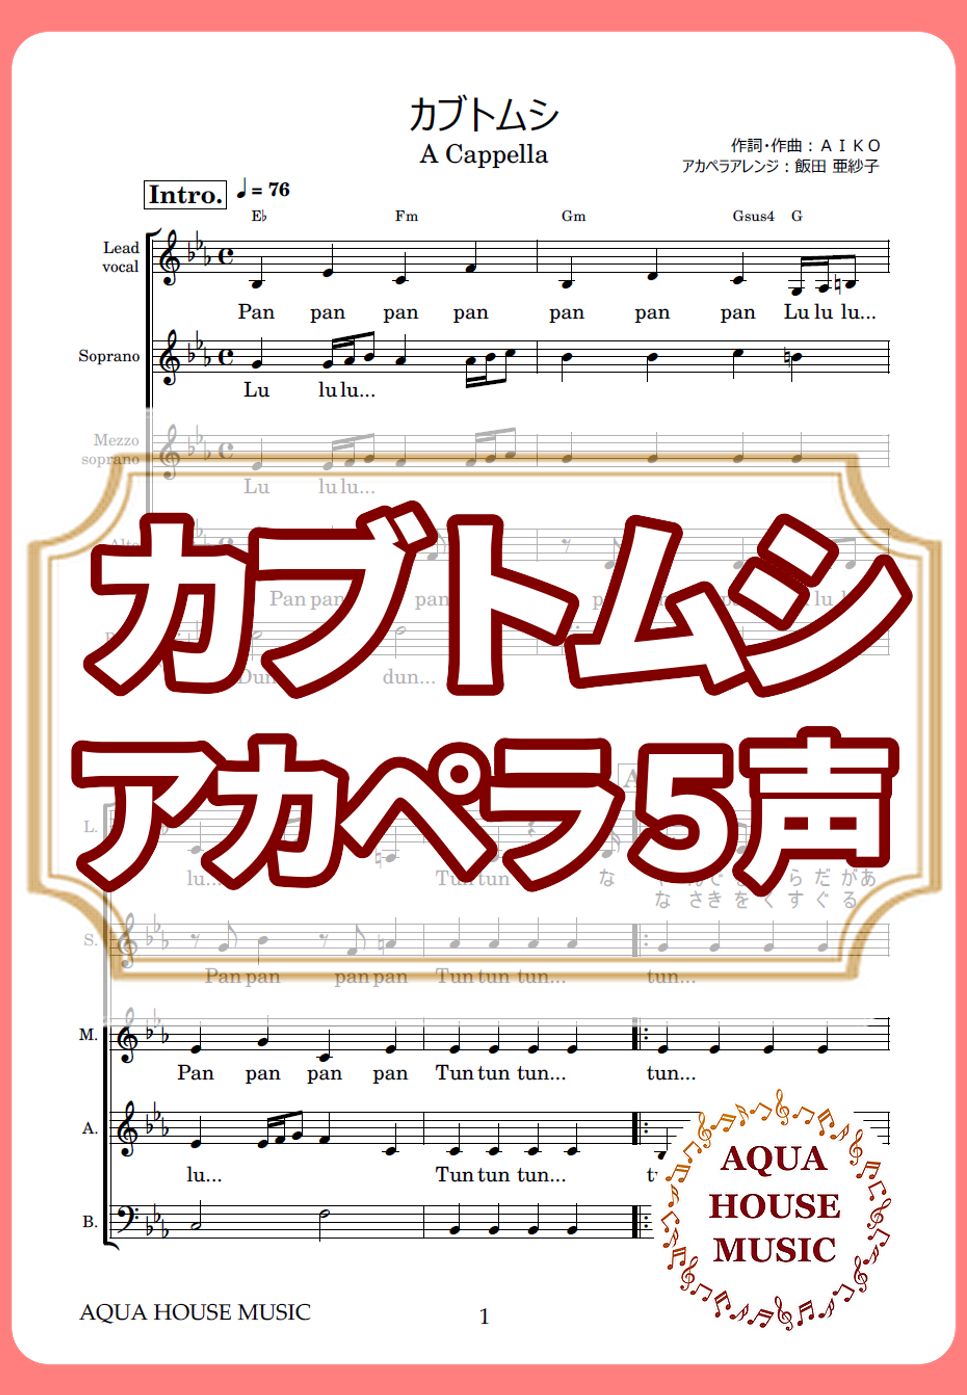 aiko - カブトムシ (アカペラ楽譜♪５声ボイパなし) by 飯田 亜紗子